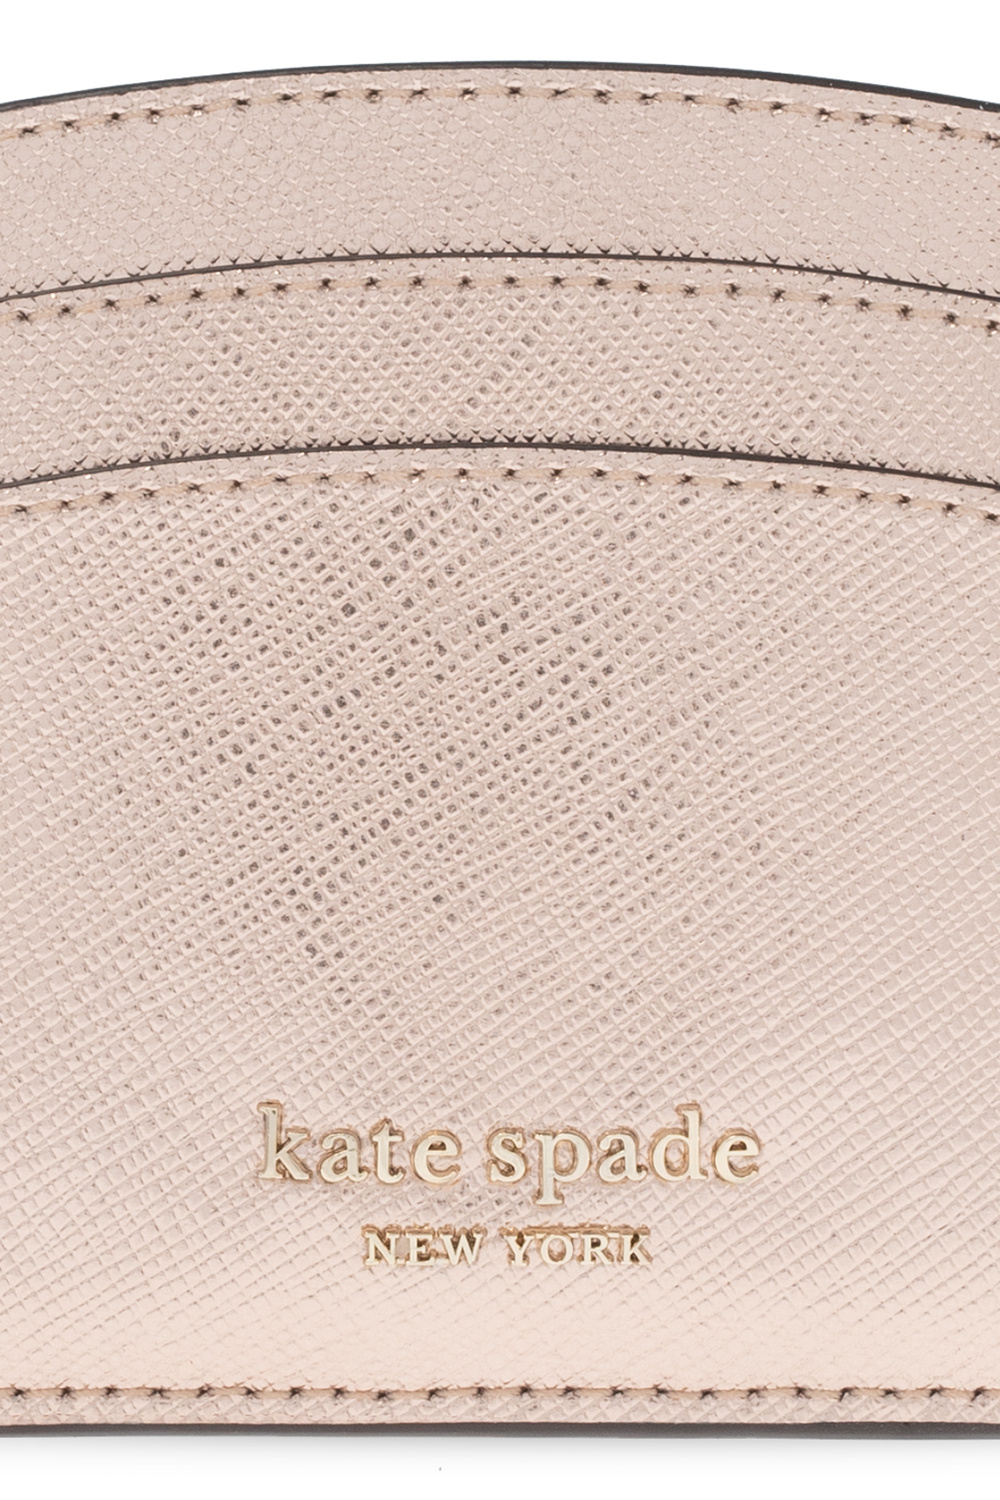 Kate spade card holder